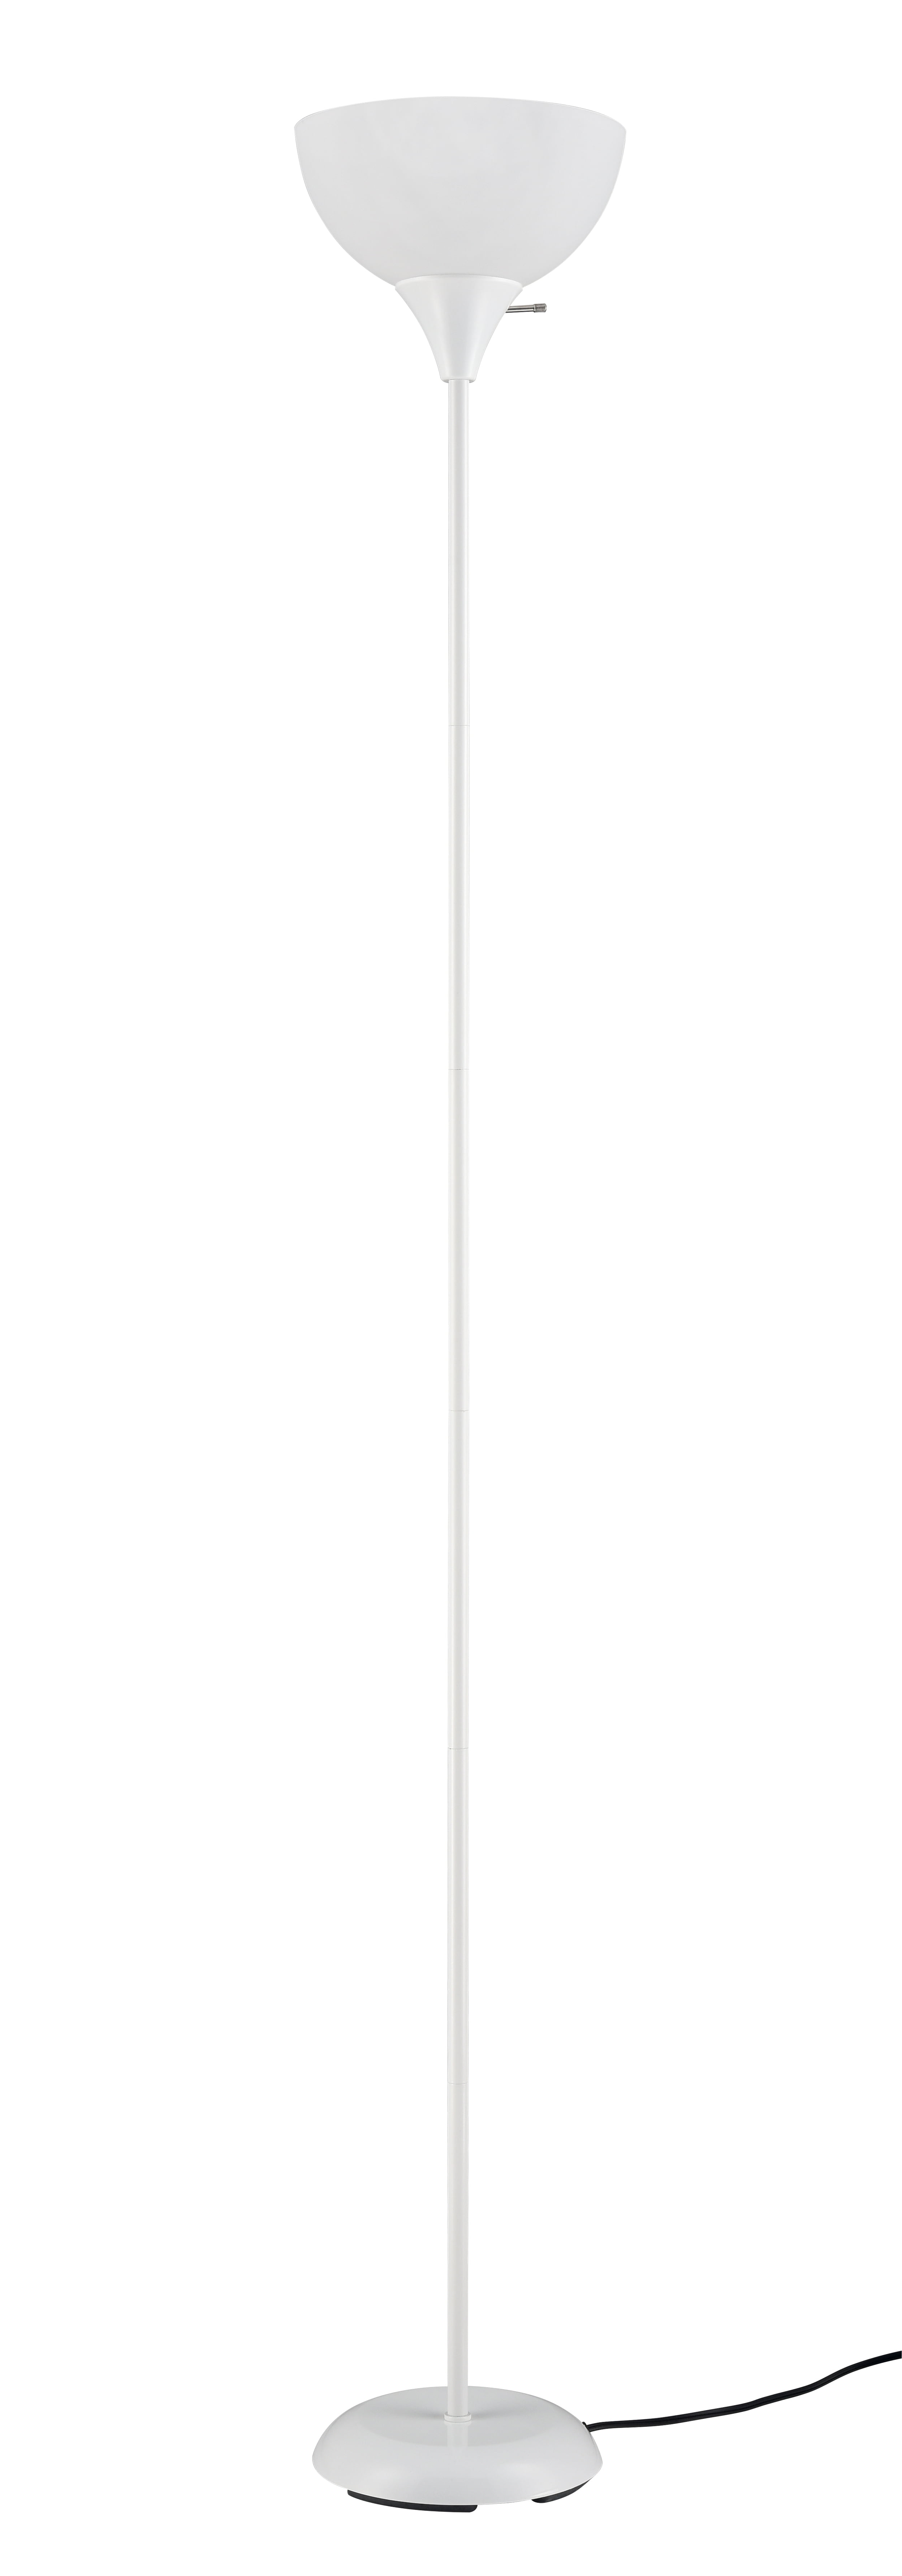 Mainstays 71" Floor Lamp, White finish and white Plastic Shade